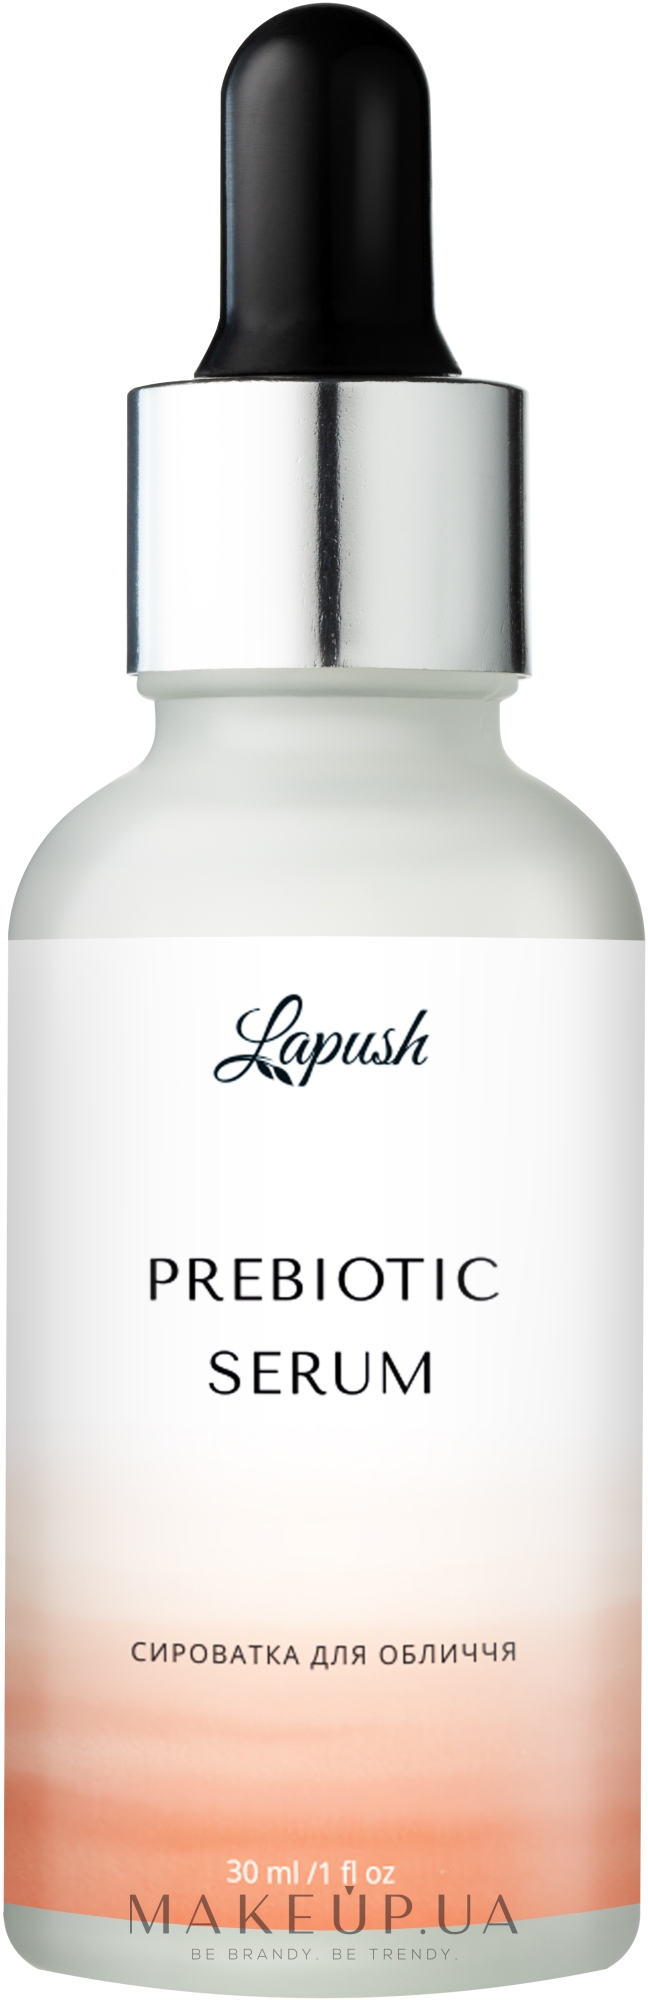 Сыворотка для лица с пребиотиком - Lapush Prebiotic Serum — фото 30ml